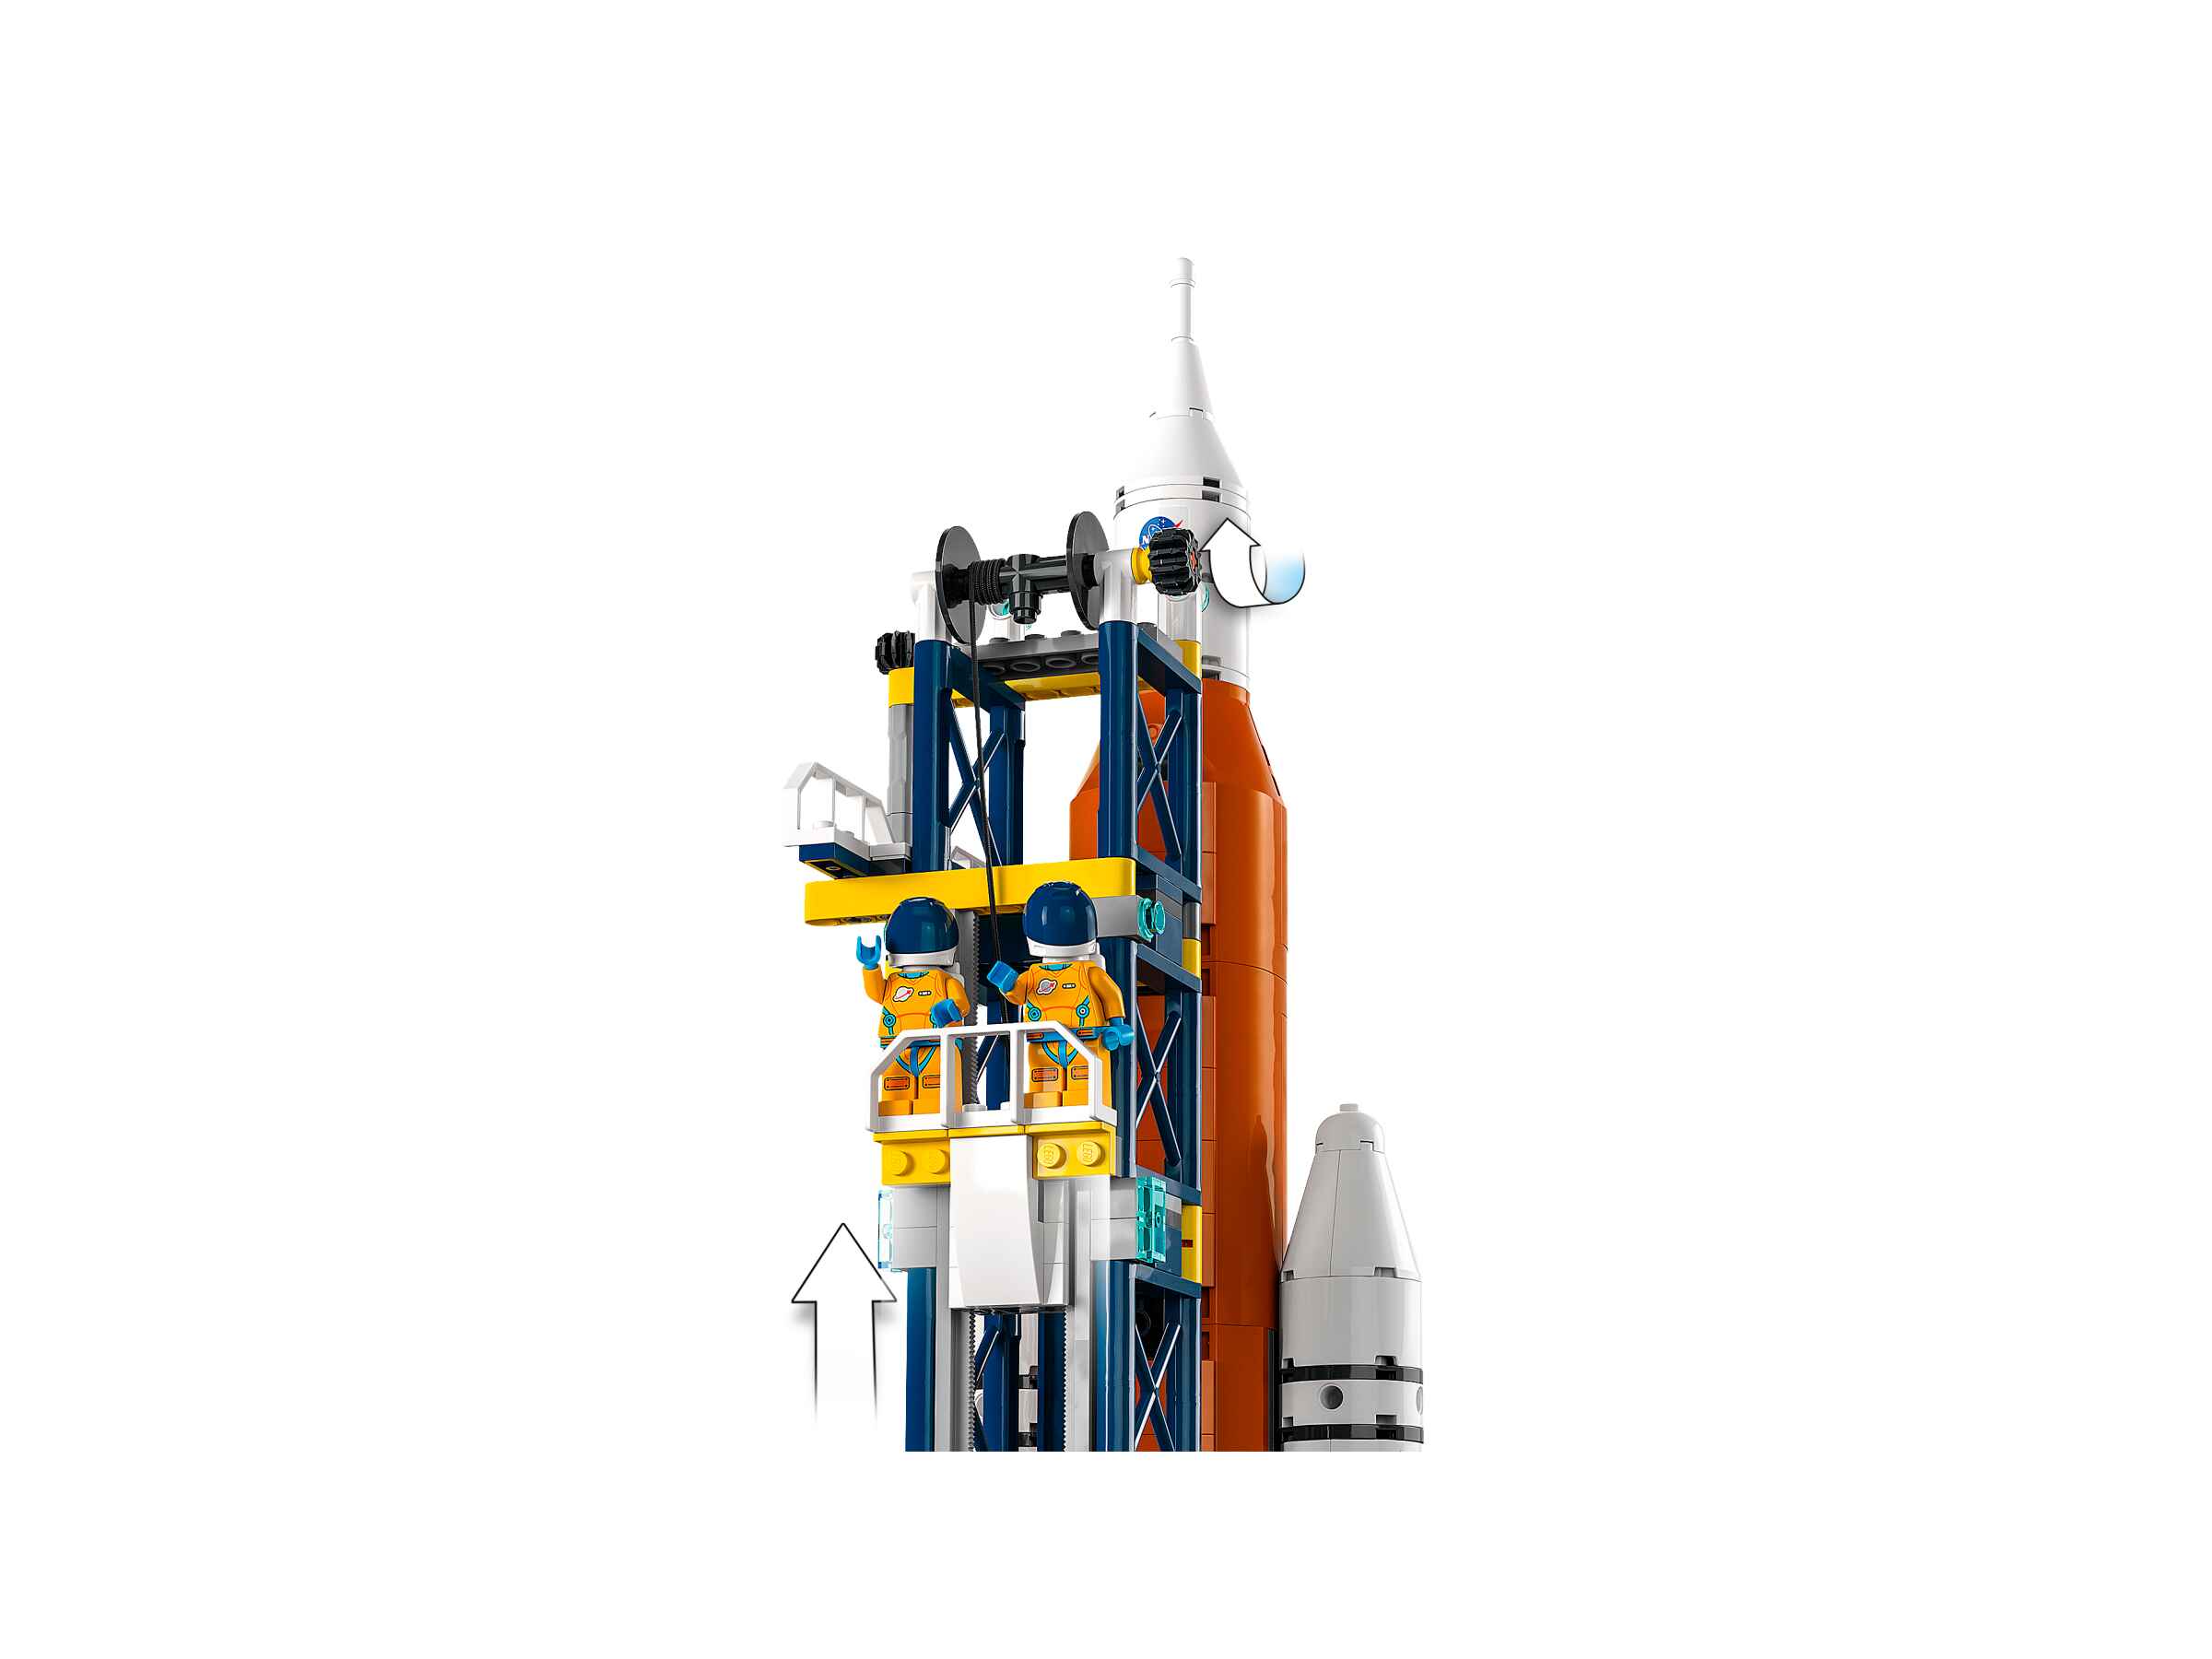 LEGO 60351 City Raumfahrtzentrum